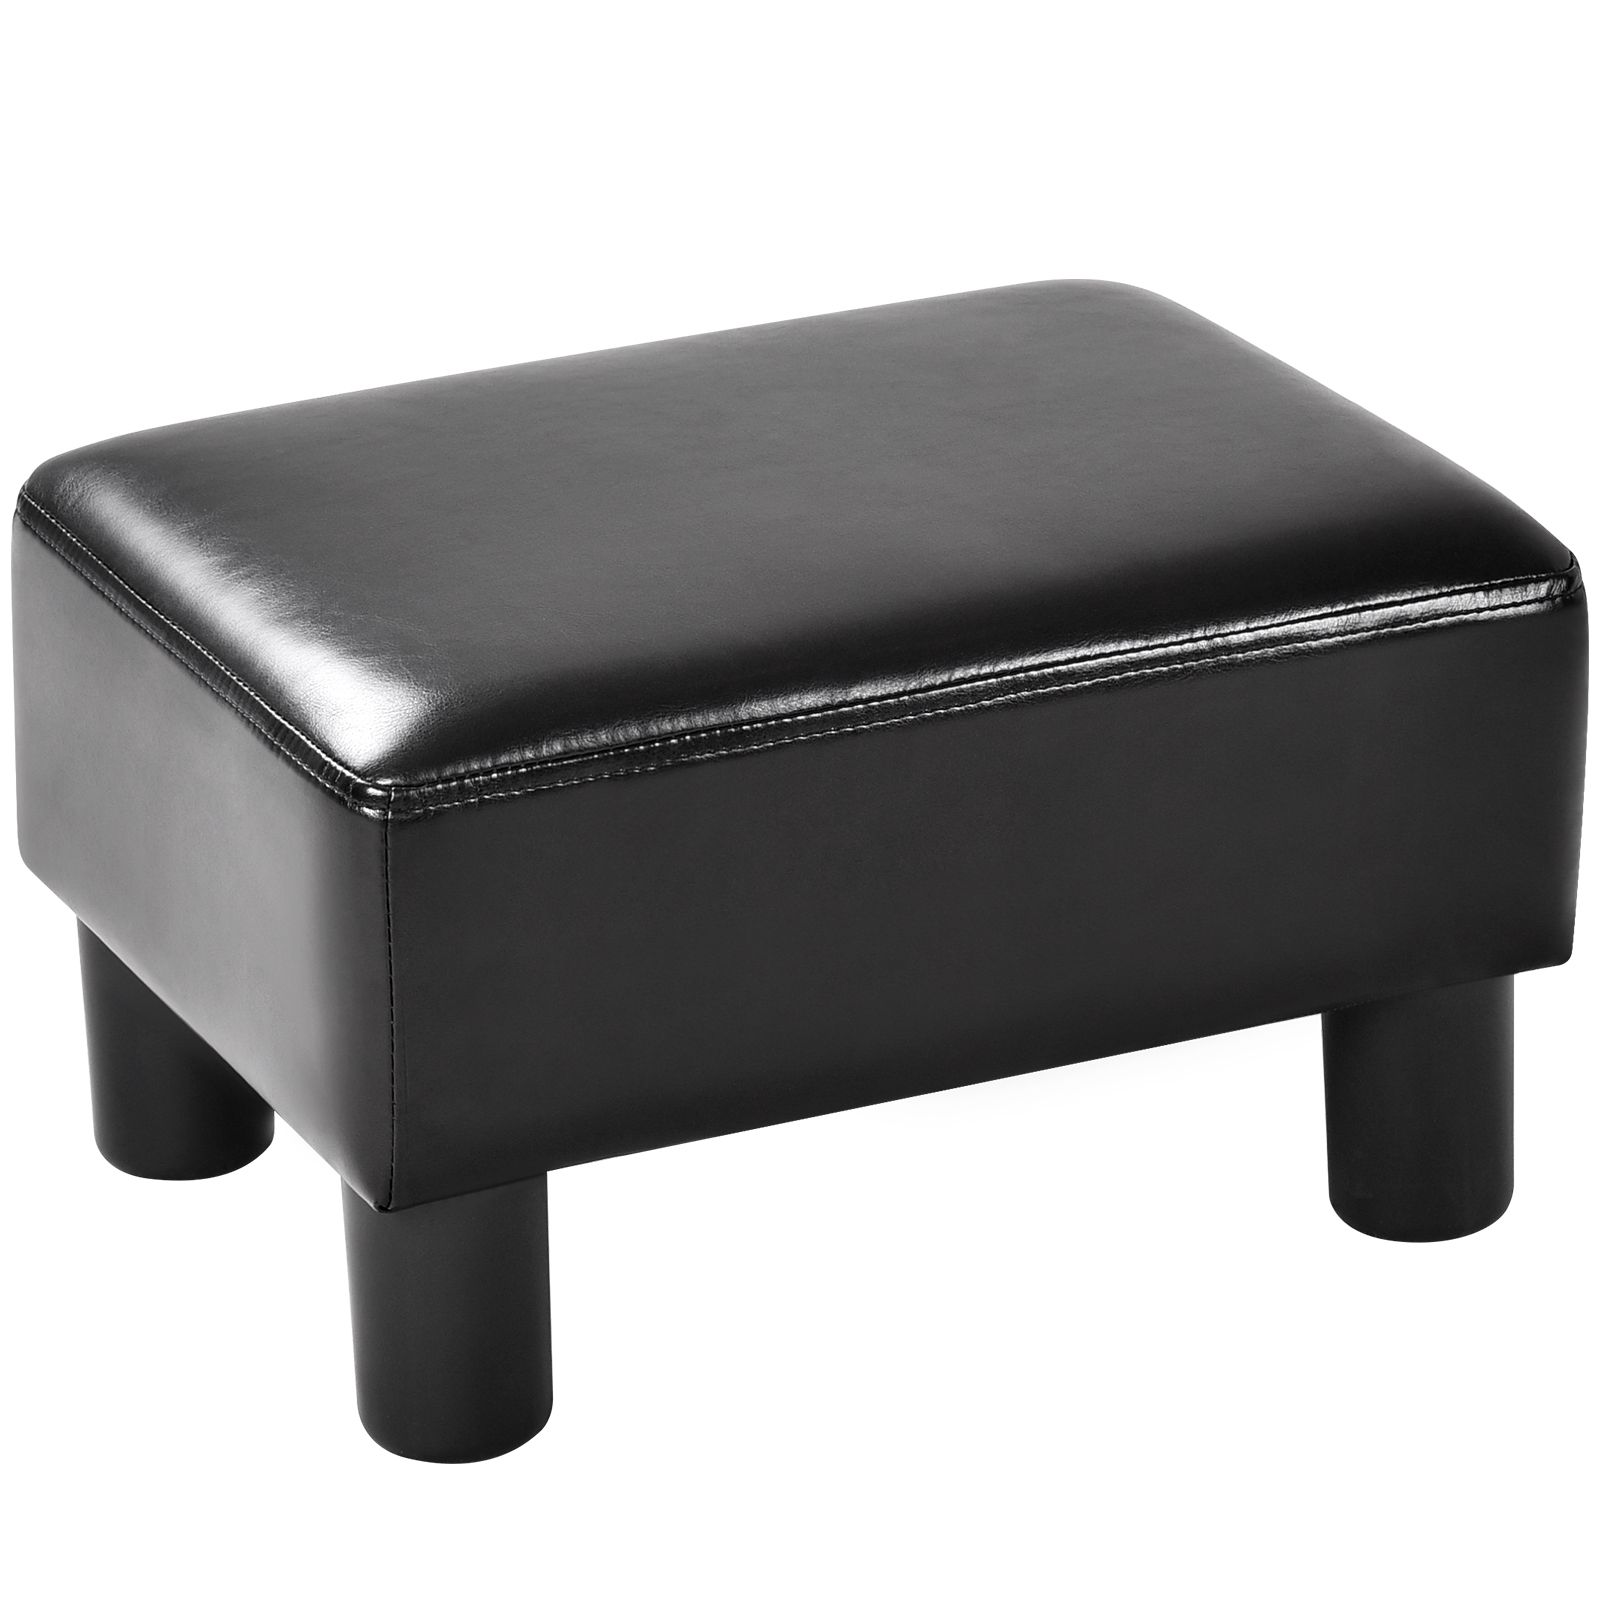 40 cm Rectangle PU Leather Small Footstool Ottoman Black